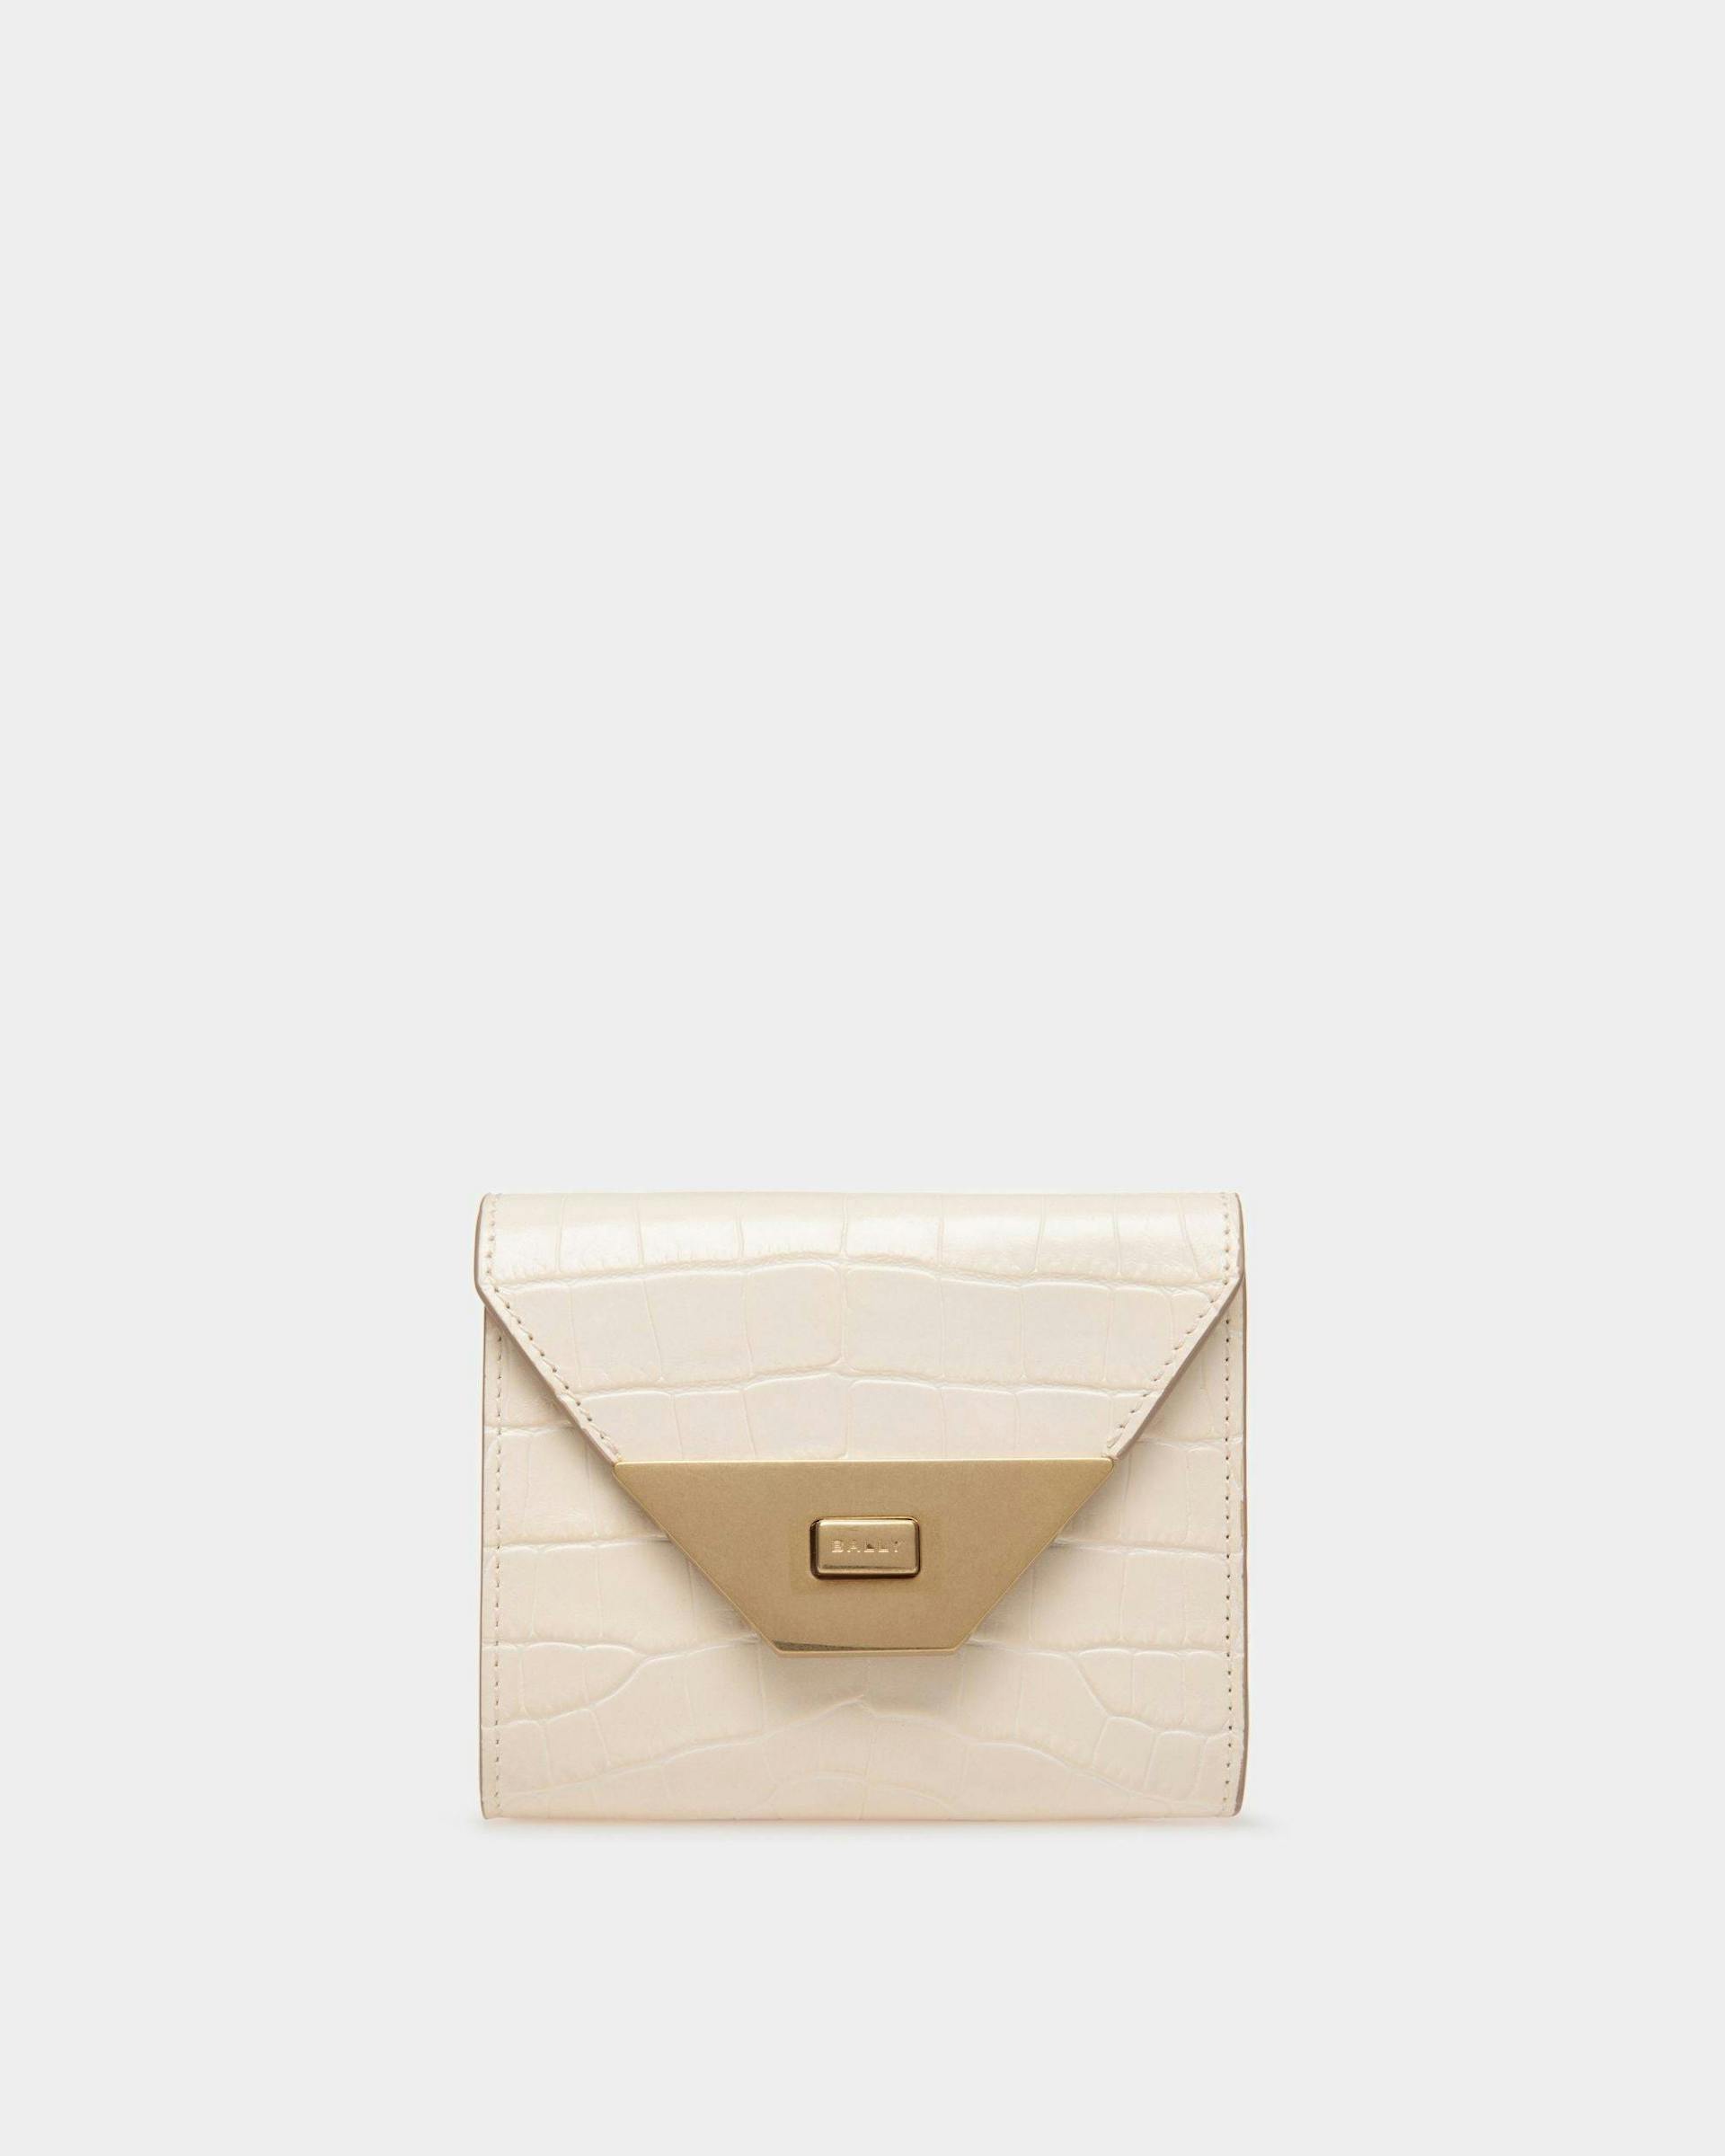 Women's Tilt Wallet In White Crocodile Print Leather | Bally | Still Life Front